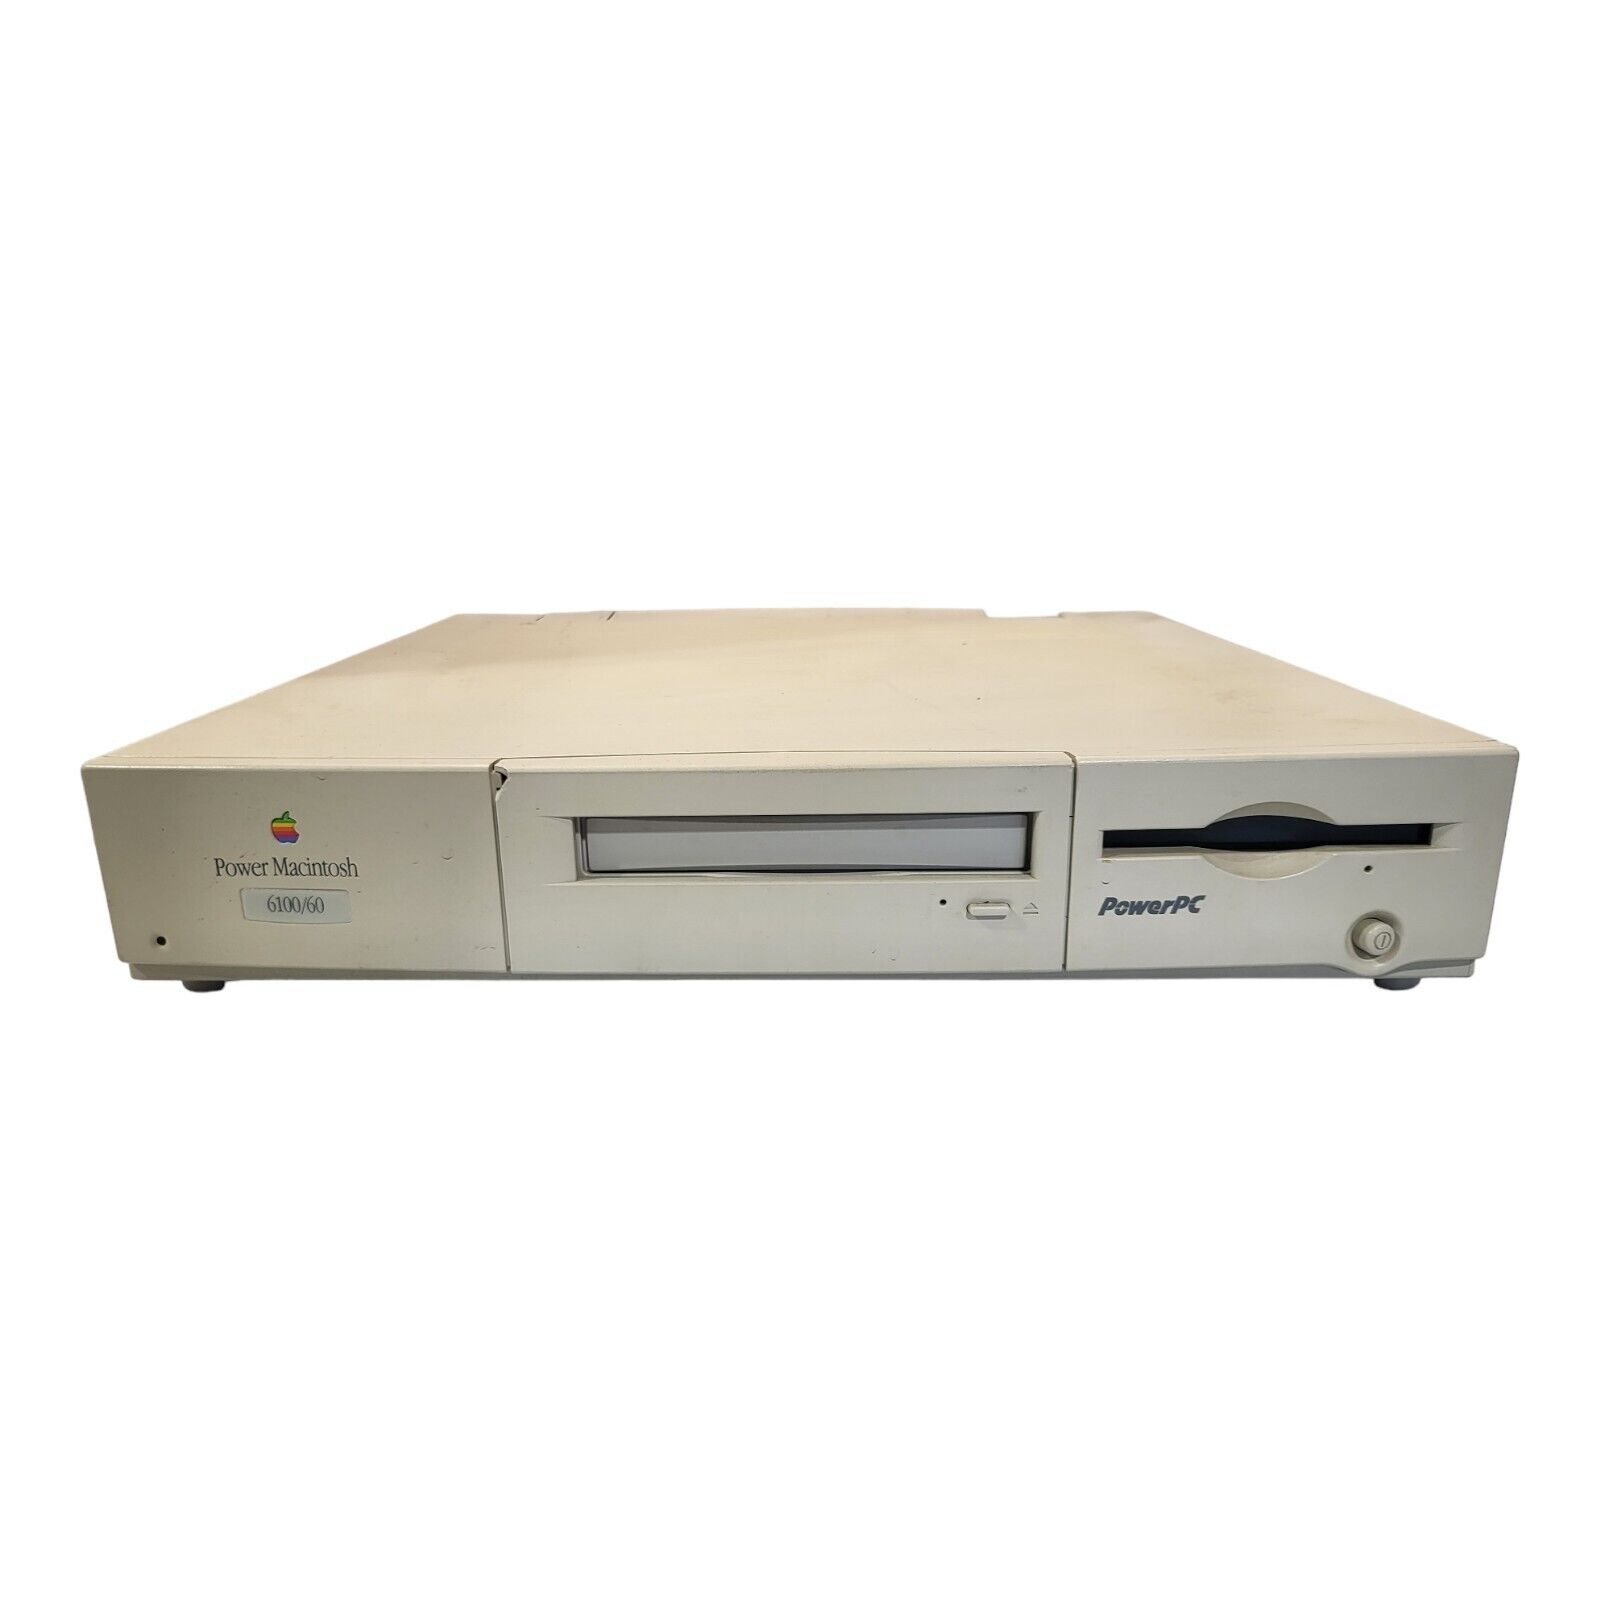 Vintage Apple Macintosh 6100/66 PowerPC 601 66MHz 8MB Retro Desktop Computer PC